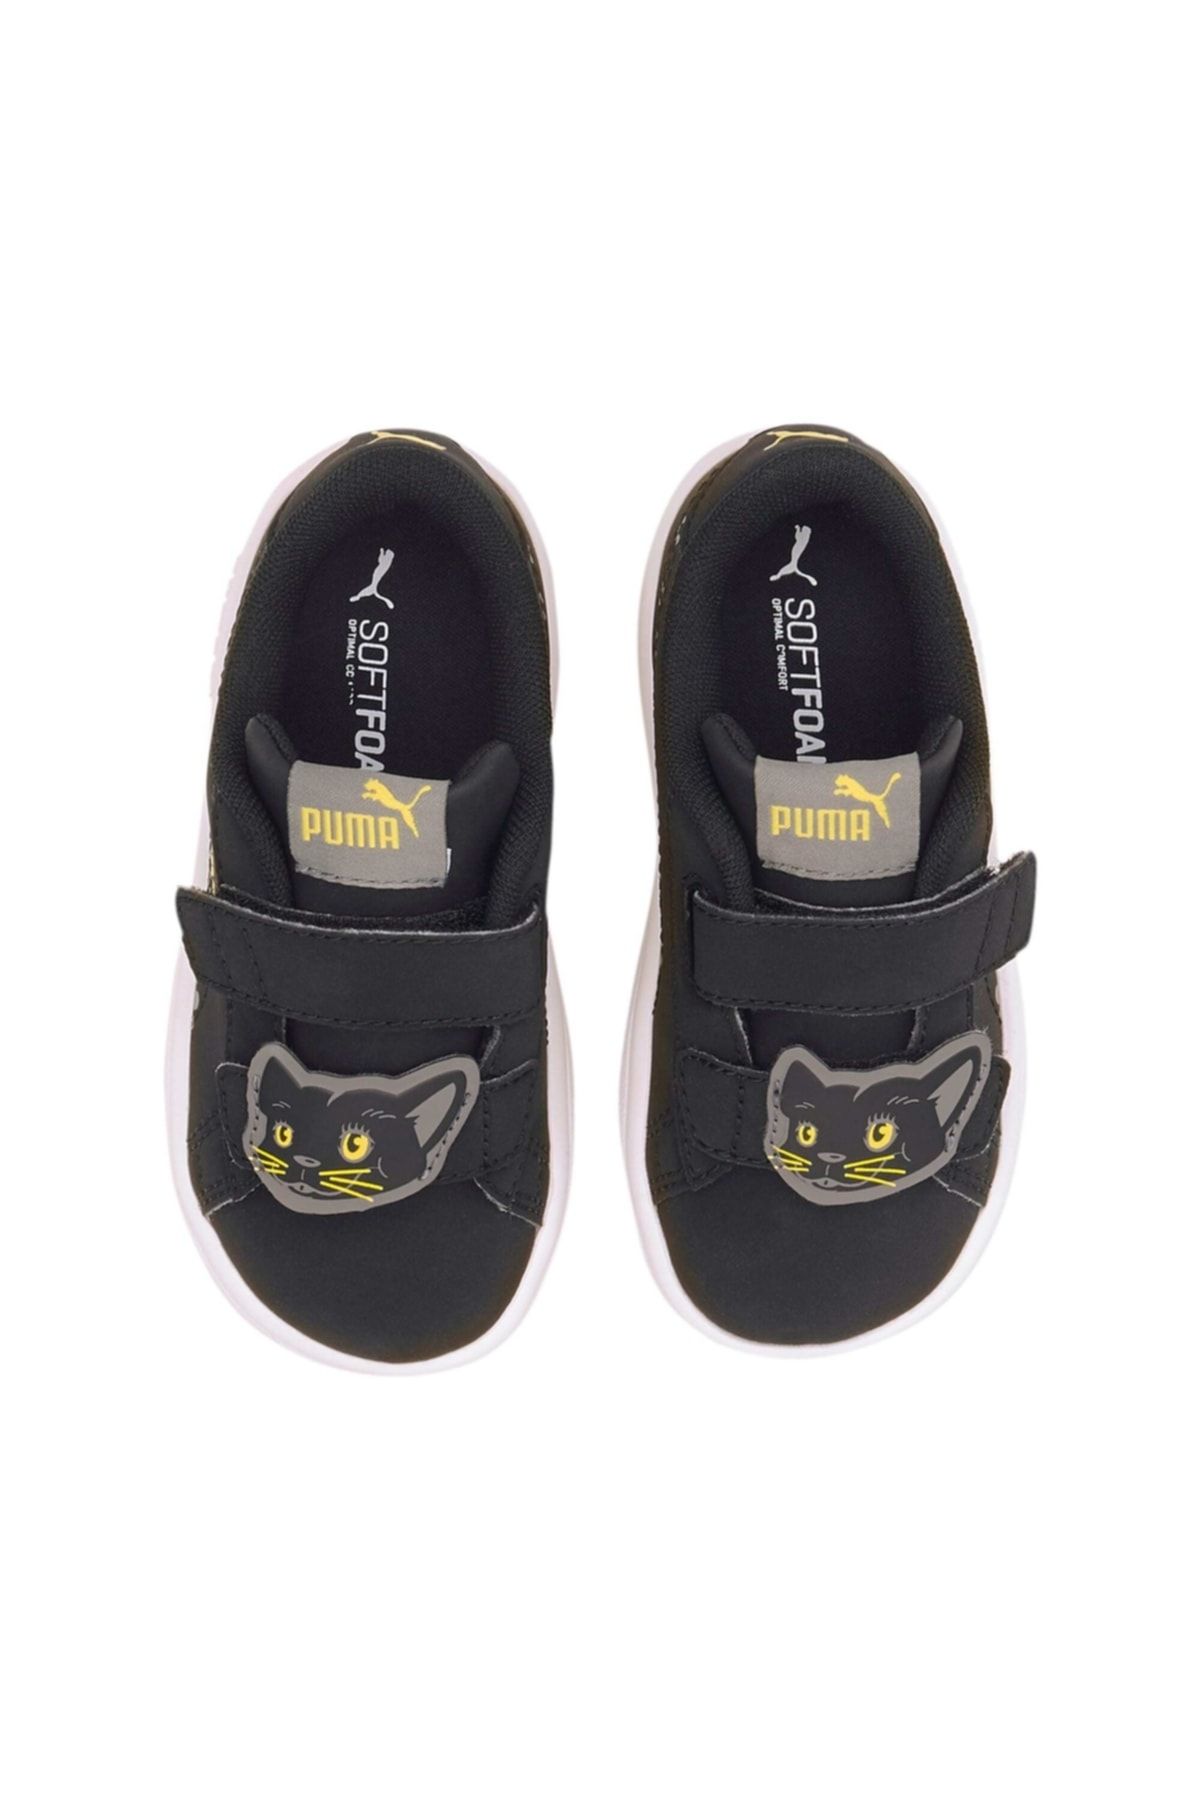 Puma SMASH V2 ANIMALS V I Siyah Erkek Çocuk Sneaker Ayakkabı 101119307